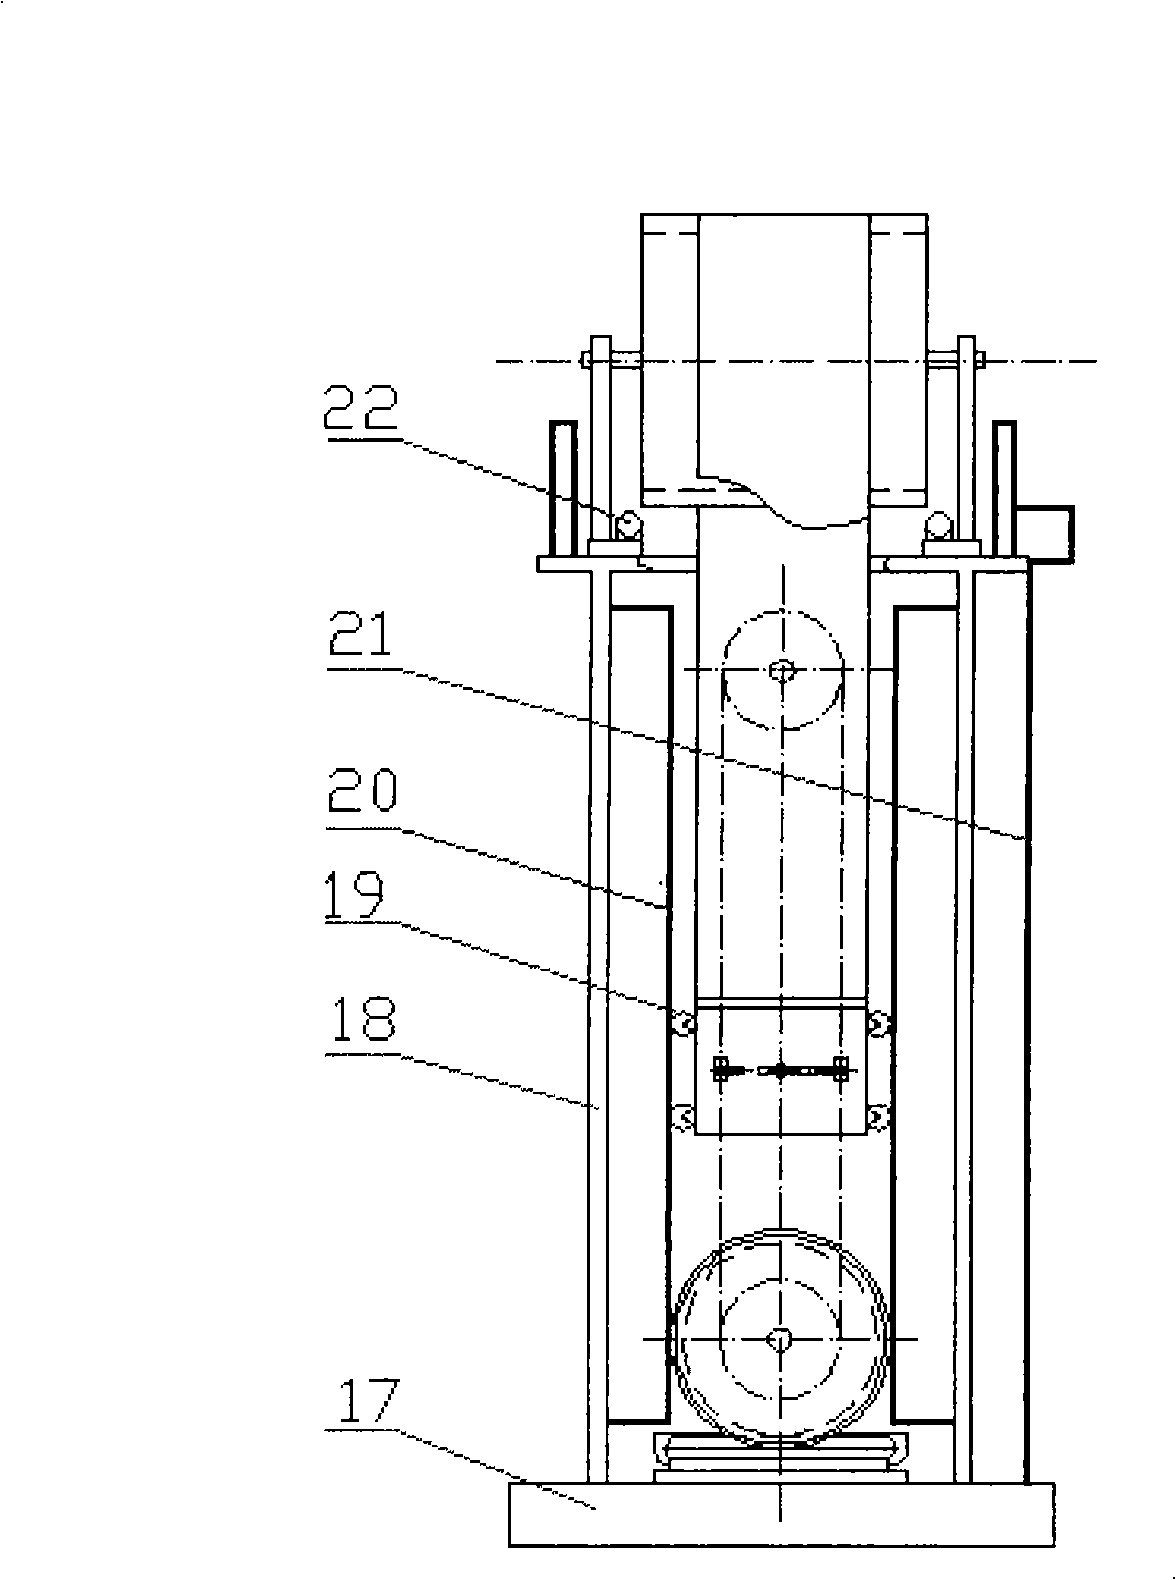 Symmetrically balanced chain type oil pumping unit